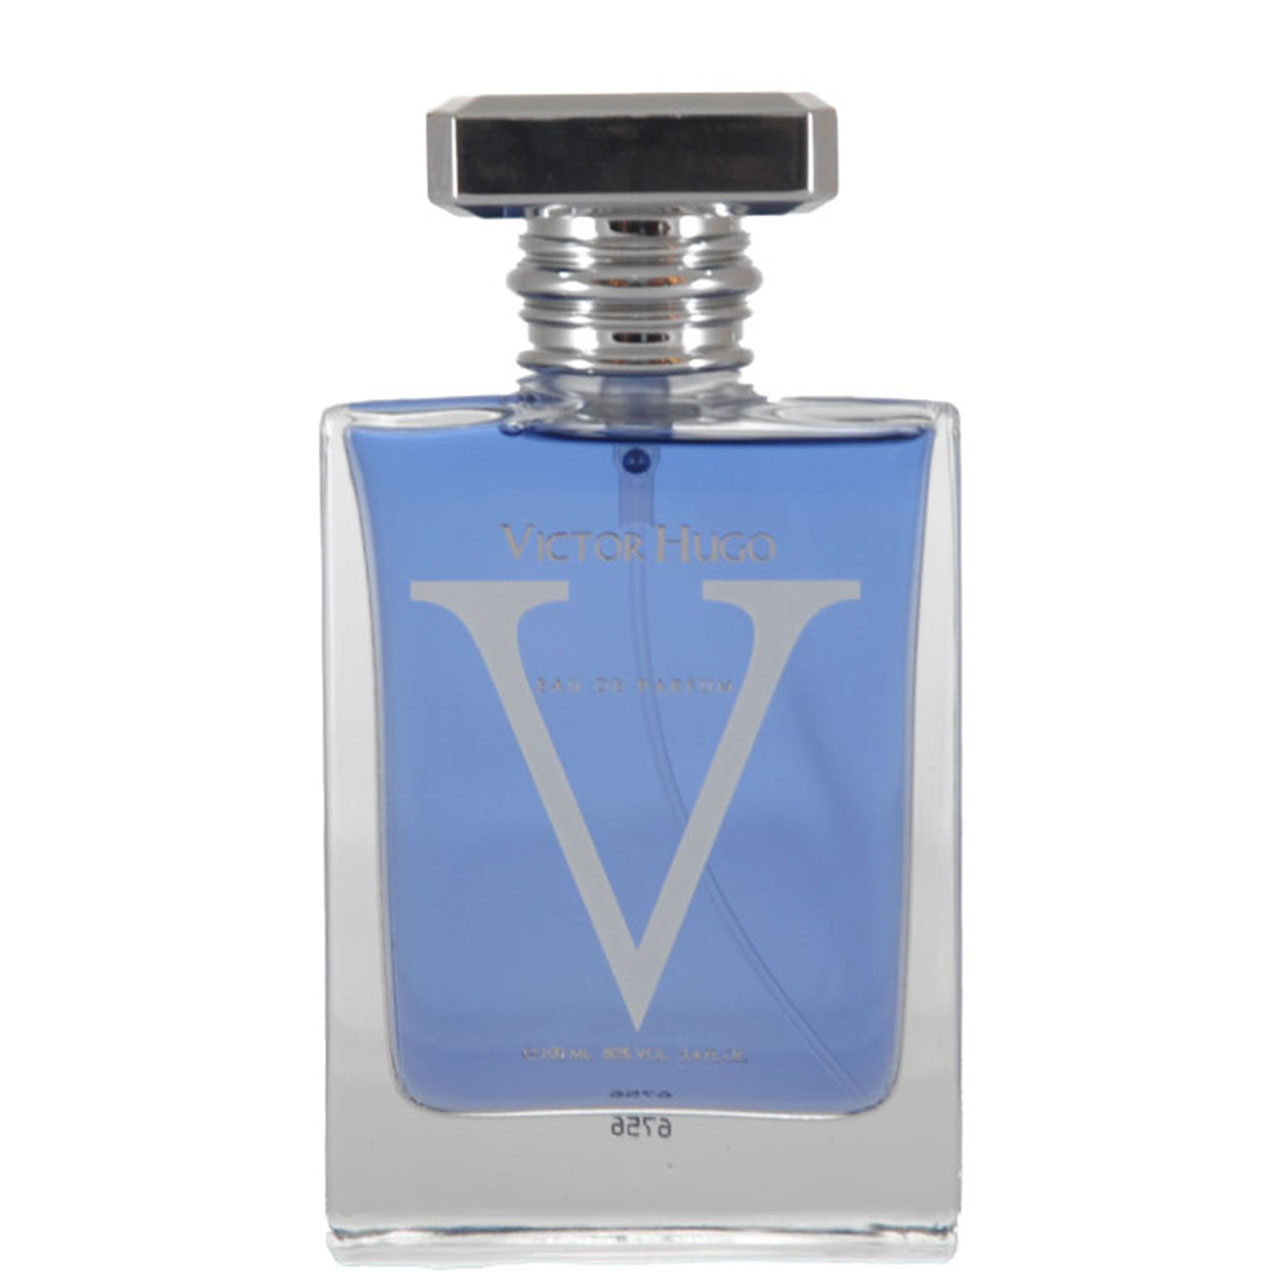 victor hugo perfume